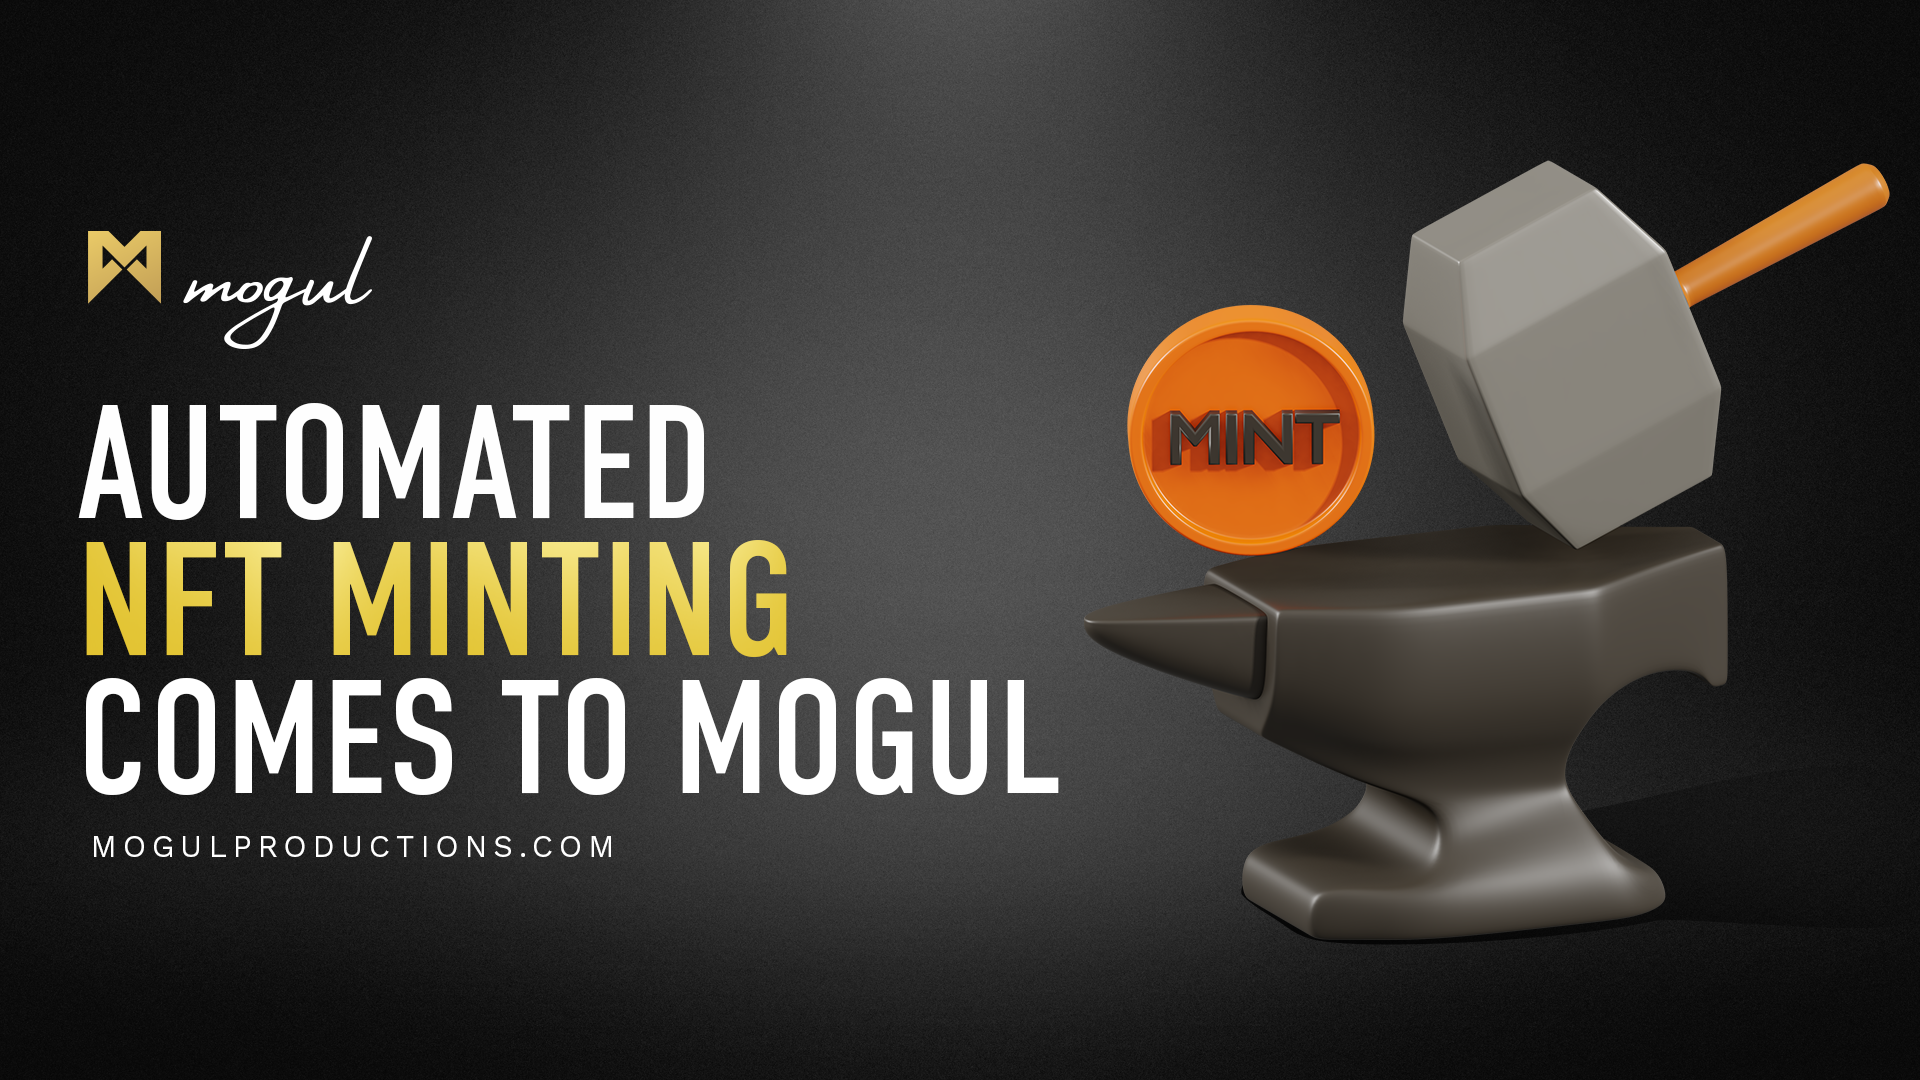 Mogul Productions - Automated NFT Minting Comes to Mogul